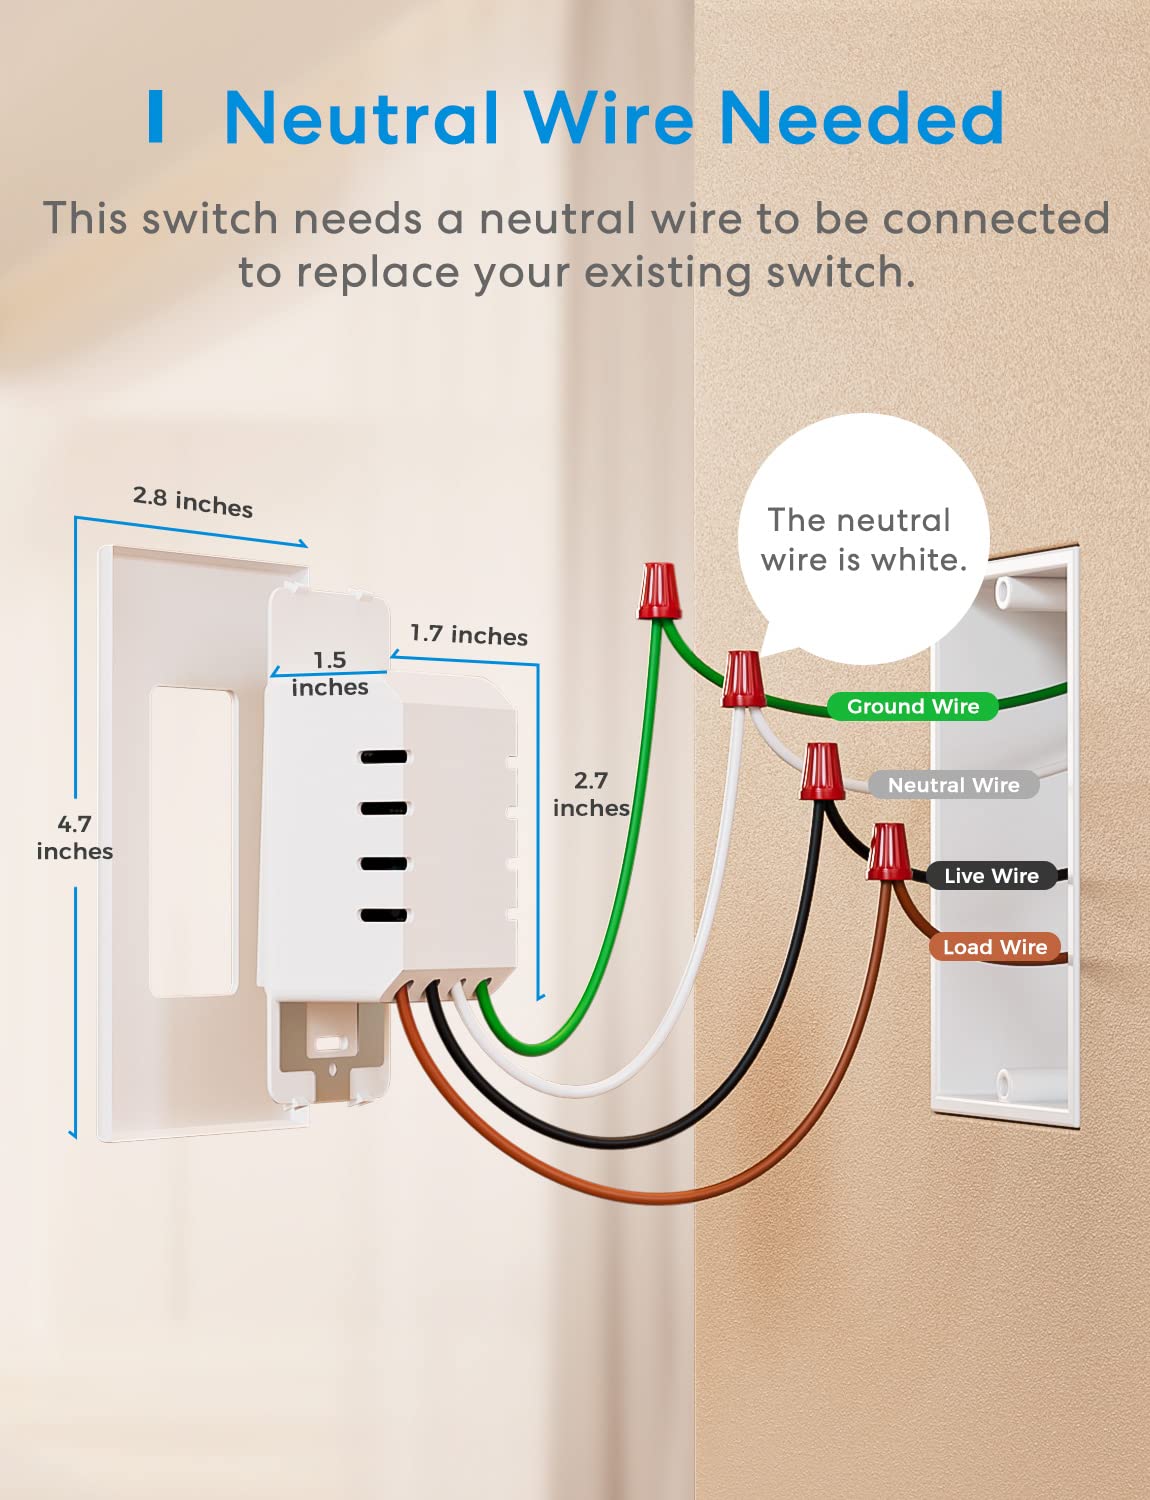 Meross Single Pole Smart Light Switch, MSS510XHK (US/CA Version)